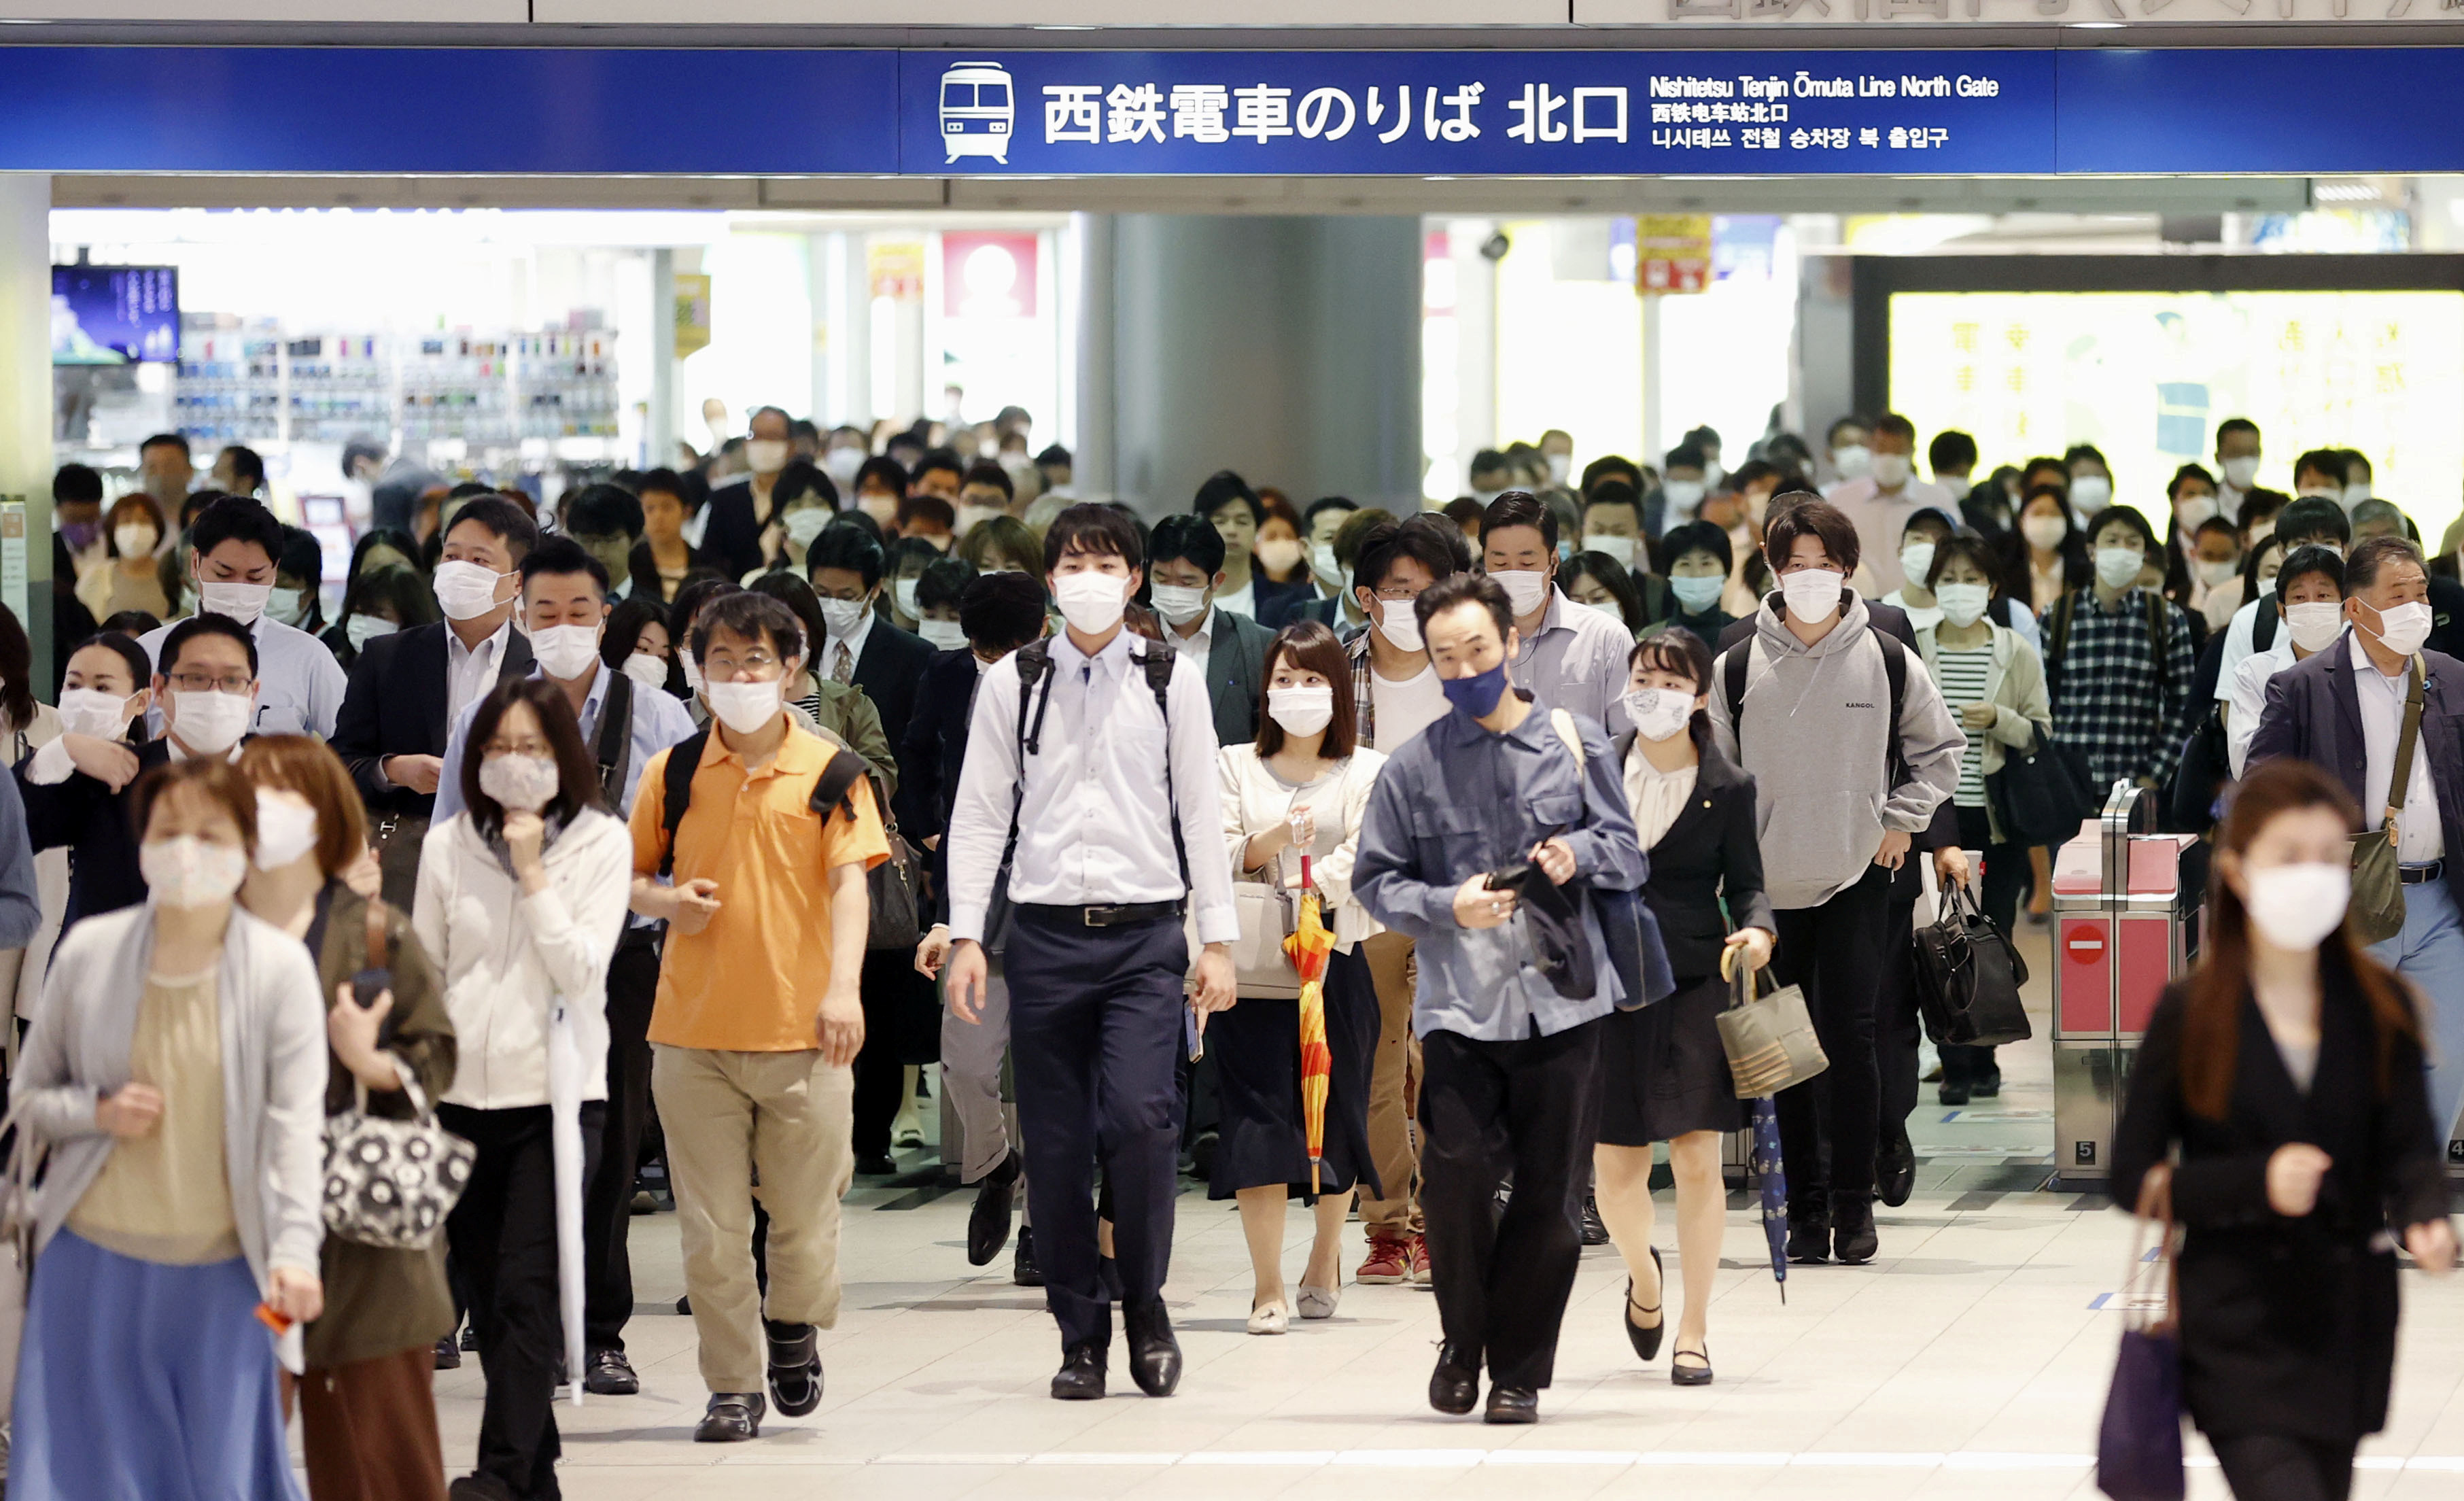 Pengguna komuter memakai masker pelindung setelah pemerintah mengumumkan berakhirnya keadaan darurat negara akibat Covid-19 di sebagian besar wilayah di Jepang, Jumat (15/5/2020). Foto Antara/Mandatory credit Kyodo/REUTERS